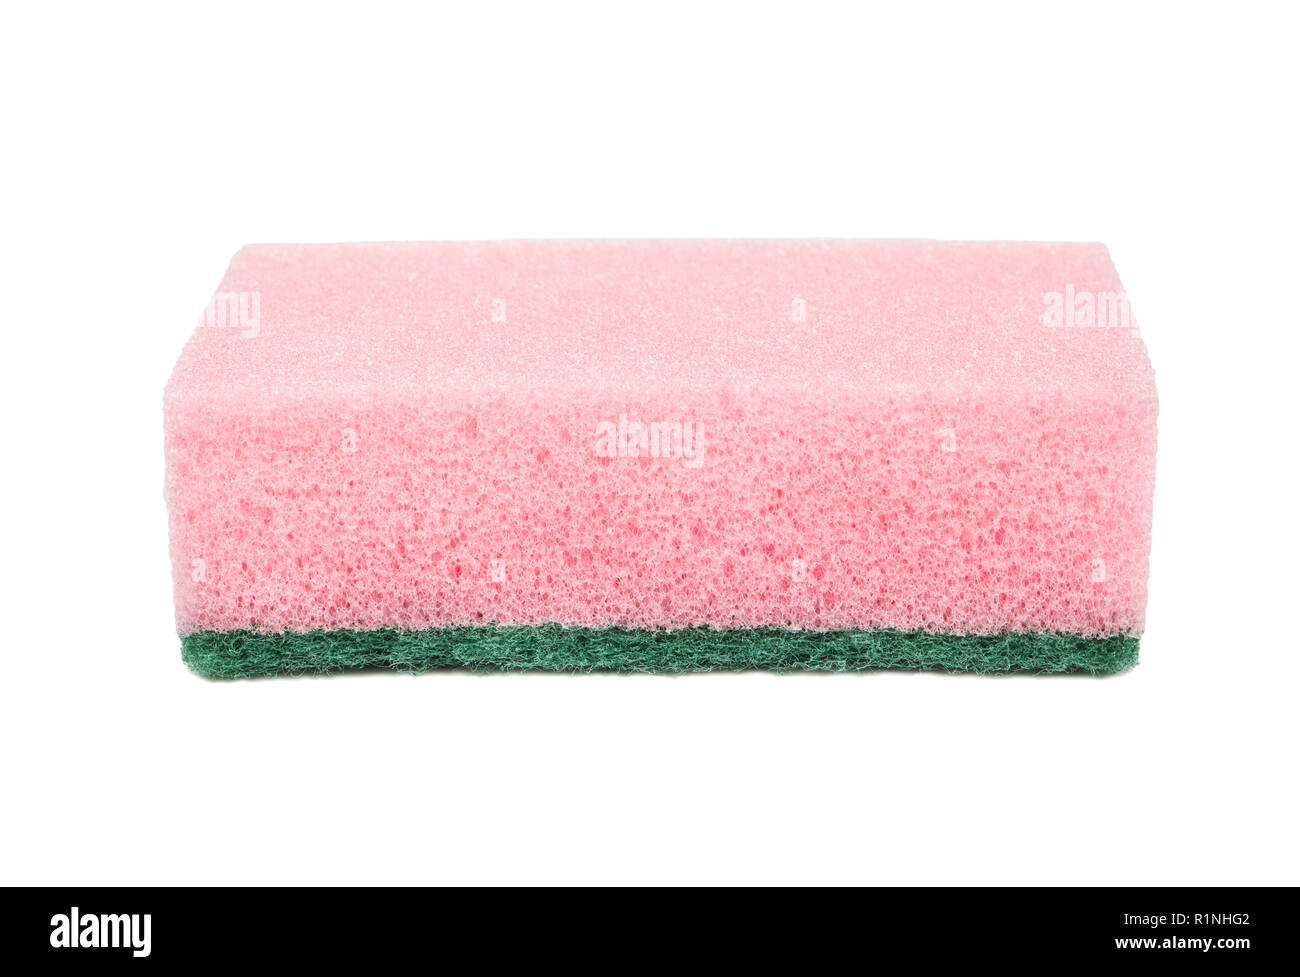 https://c8.alamy.com/comp/R1NHG2/new-pink-dish-washing-sponge-isolated-on-white-background-R1NHG2.jpg